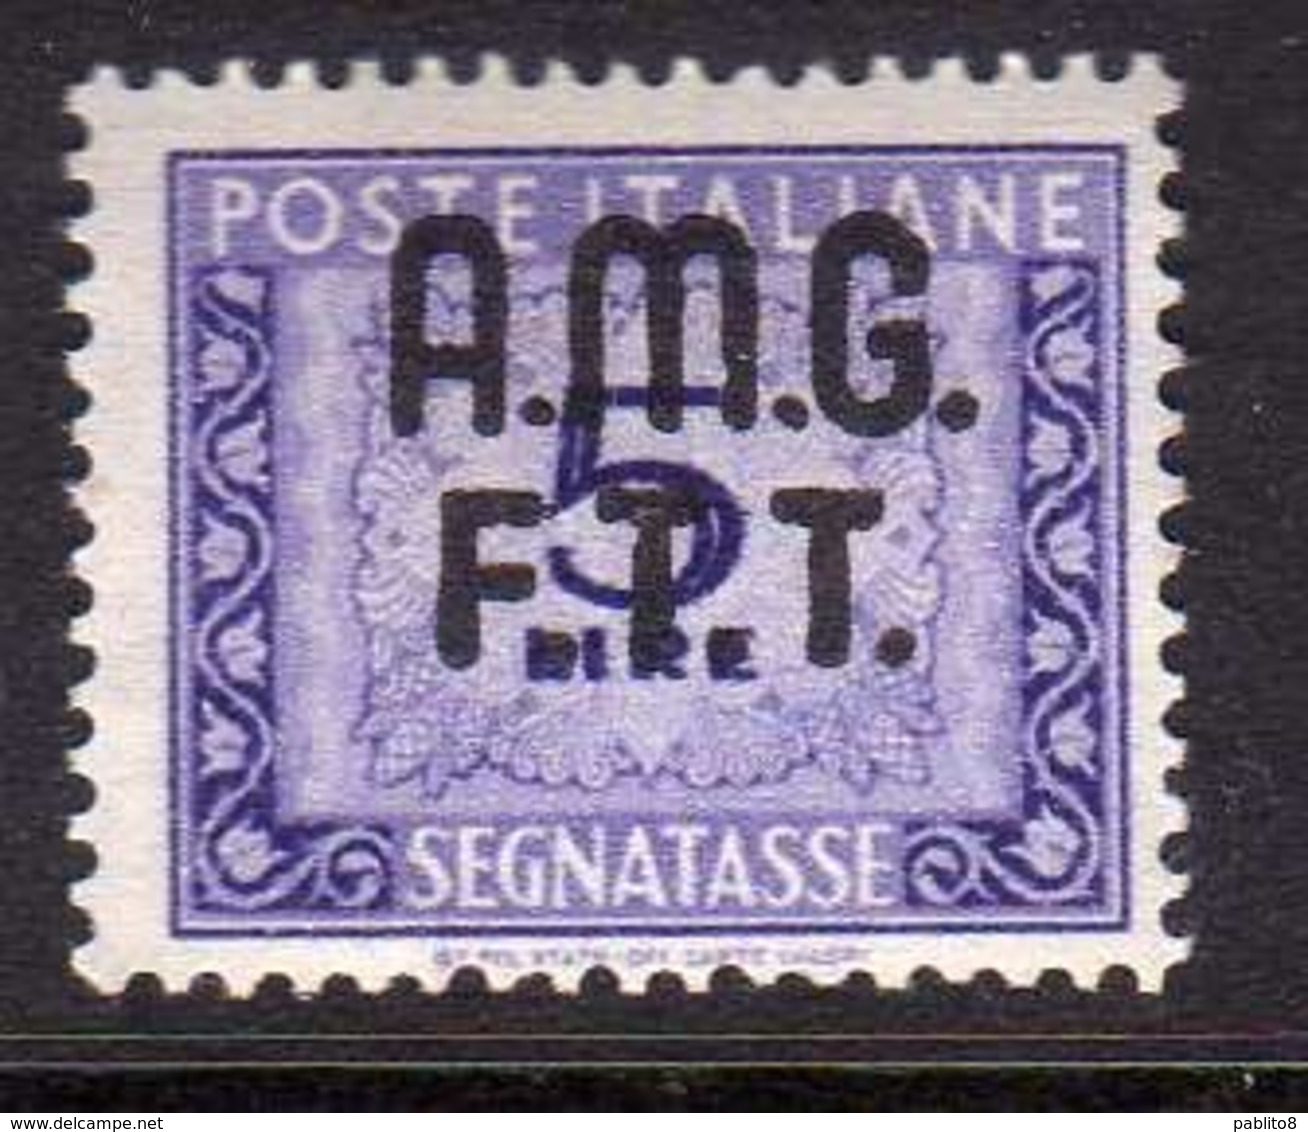 TRIESTE A 1947 - 1949 AMG-FTT SOPRASTAMPATO D'ITALIA OVERPRINTED SEGNATASSE POSTAGE DUE TASSE TAXE LIRE 5 MNH - Portomarken